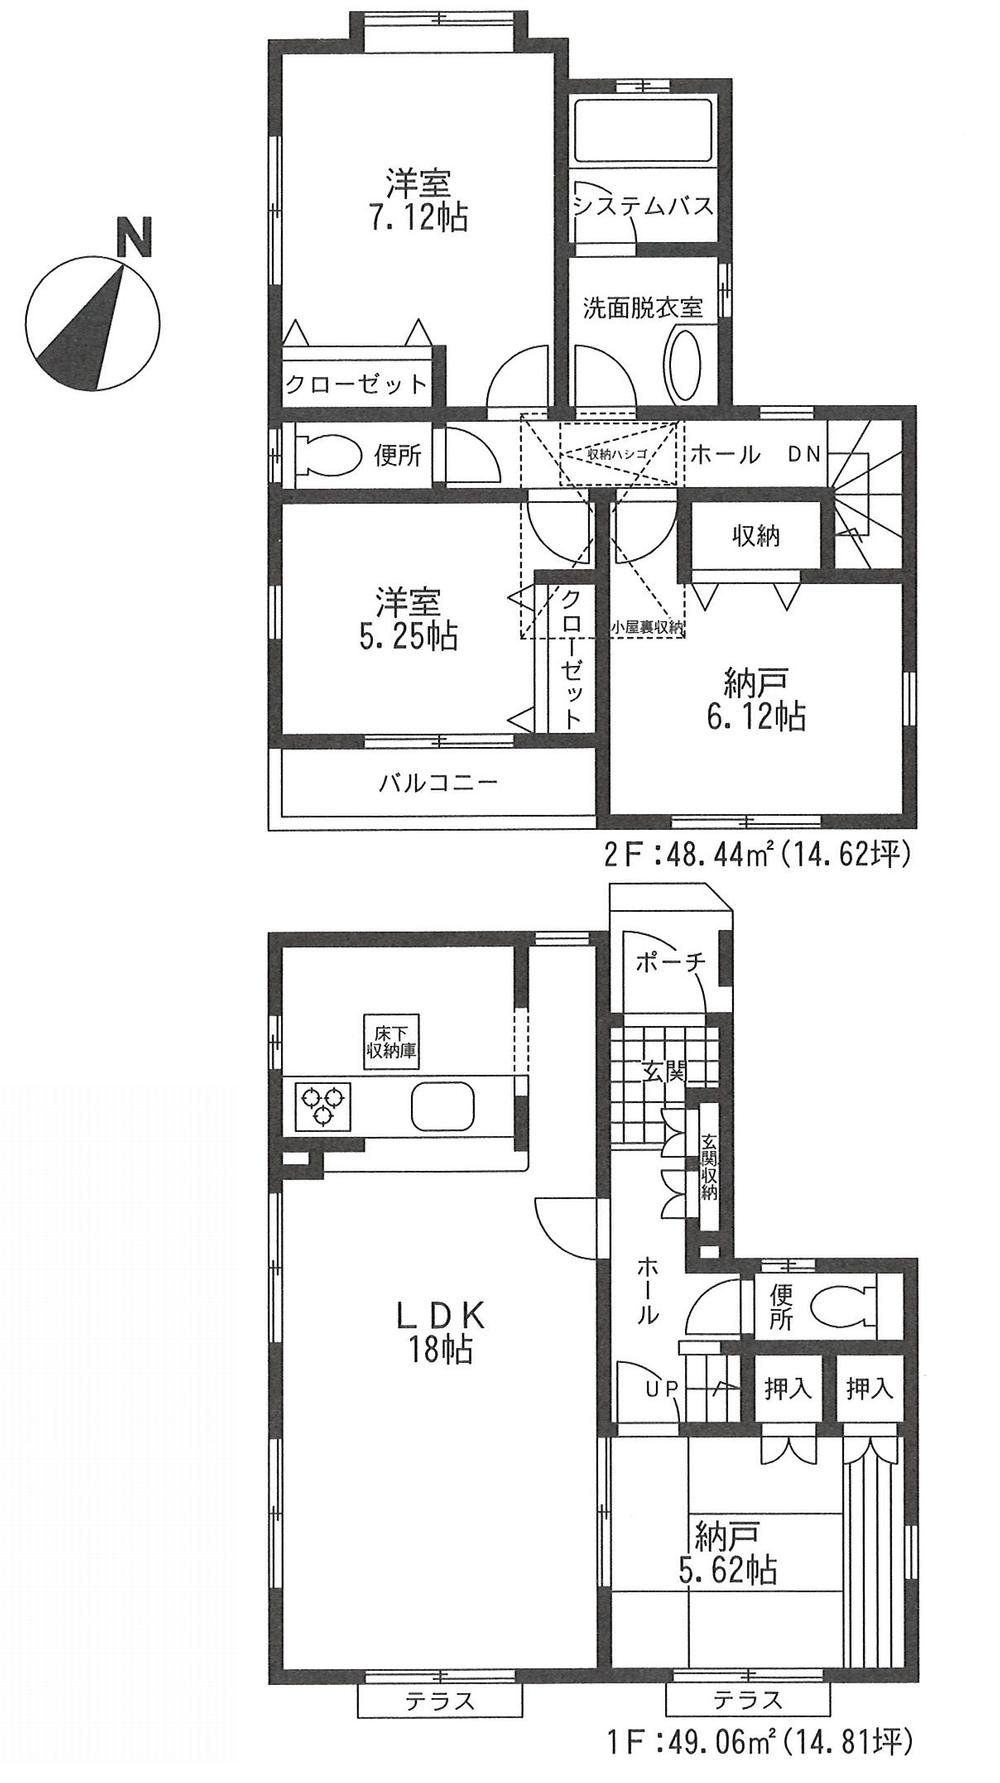 Floor plan. 26.5 million yen, 2LDK + 2S (storeroom), Land area 86.62 sq m , Building area 97.5 sq m LDK18 Pledge There is attic storage